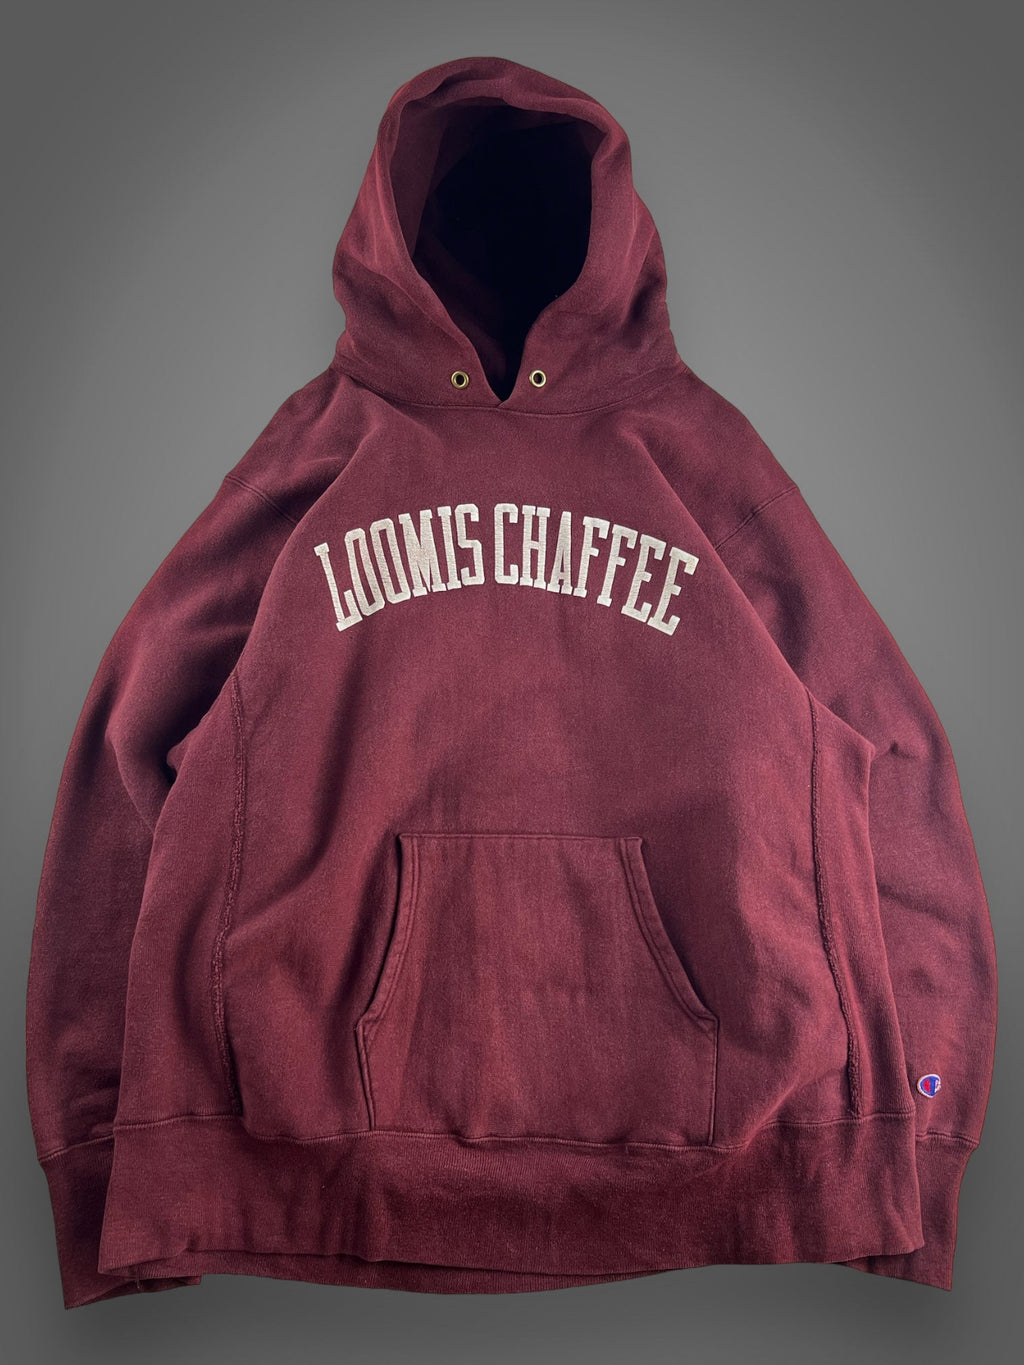 80’s Champion Loomis Chaffee hooded sweatshirt XL